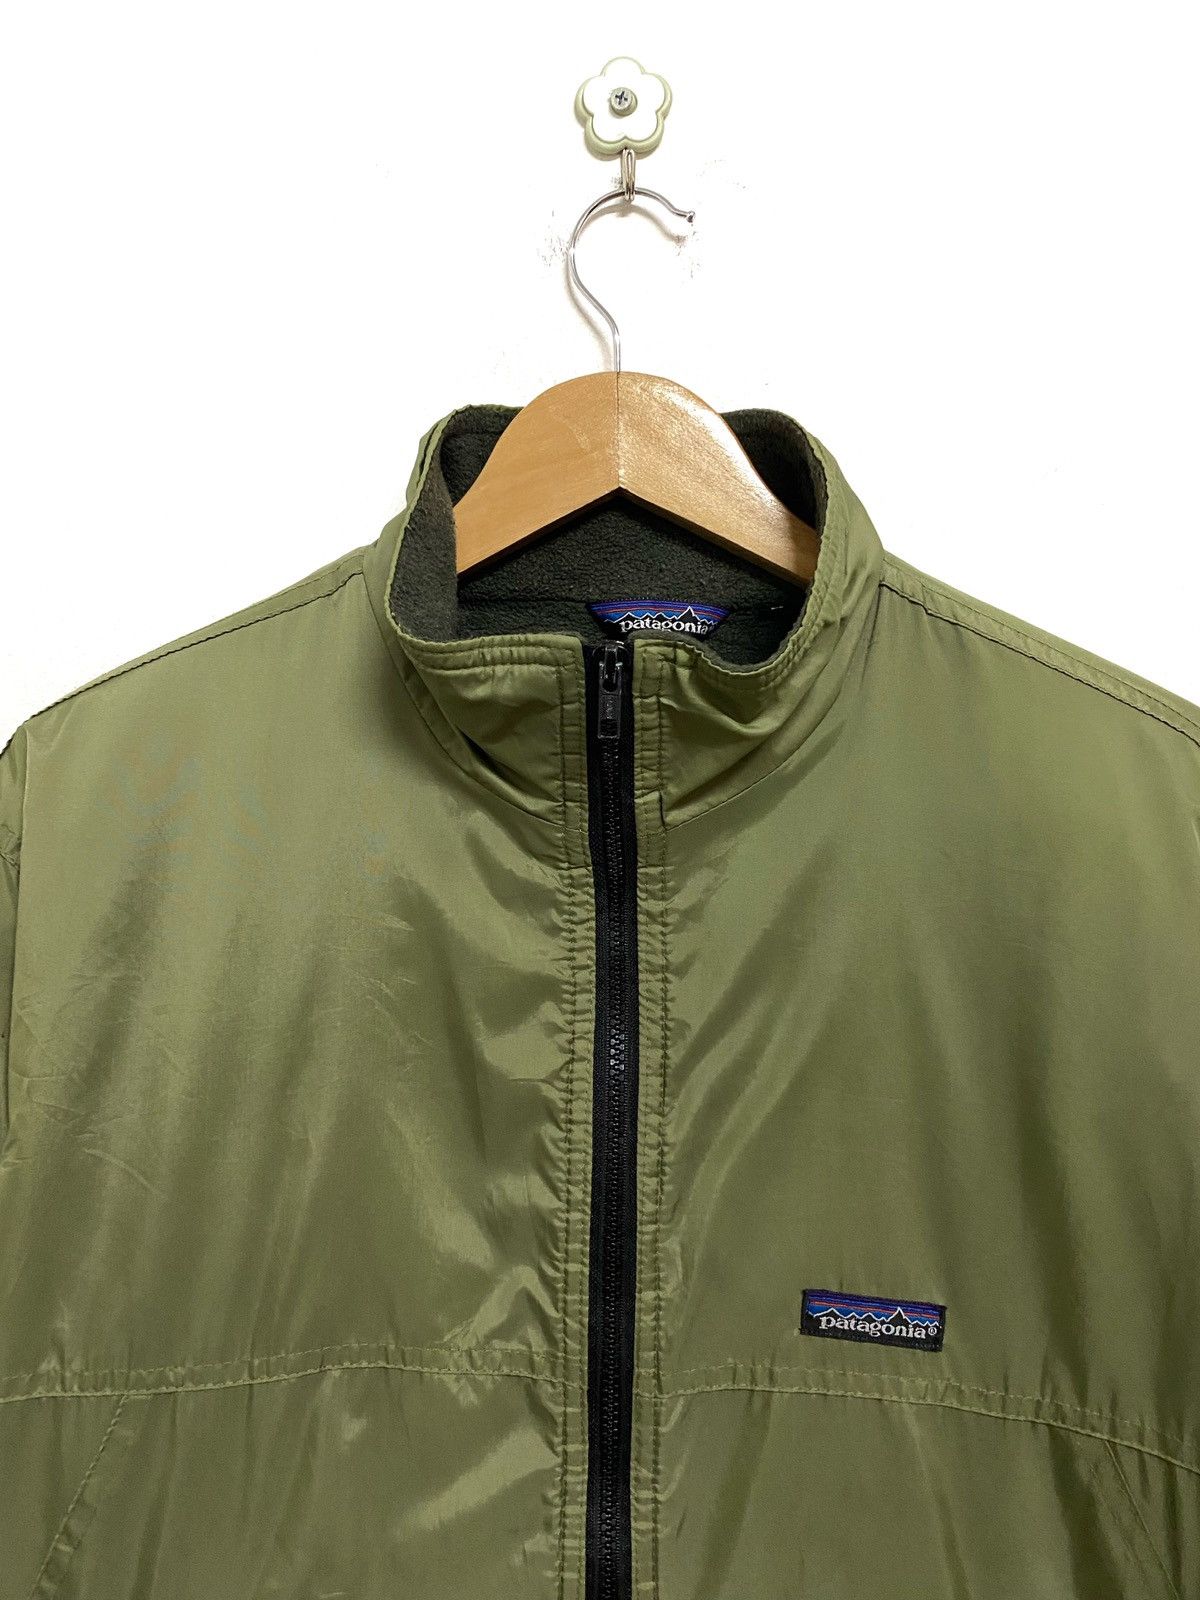 Vintage Patagonia Fleece Lined Zip Up Jacket - 3